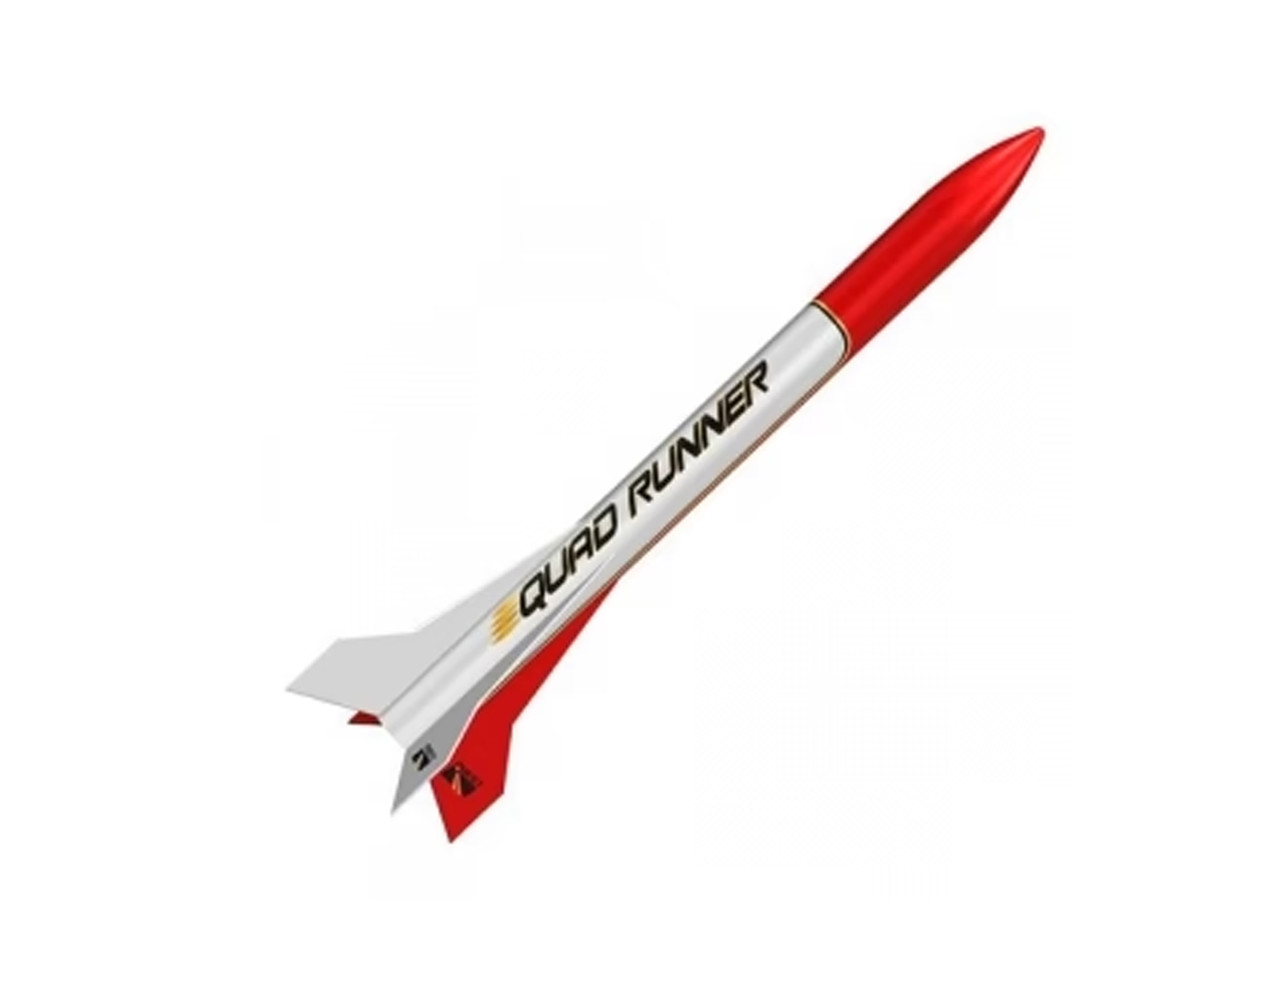 Enerjet by AeroTech Quad Runner Advanced Rocketry Kit - Q5016